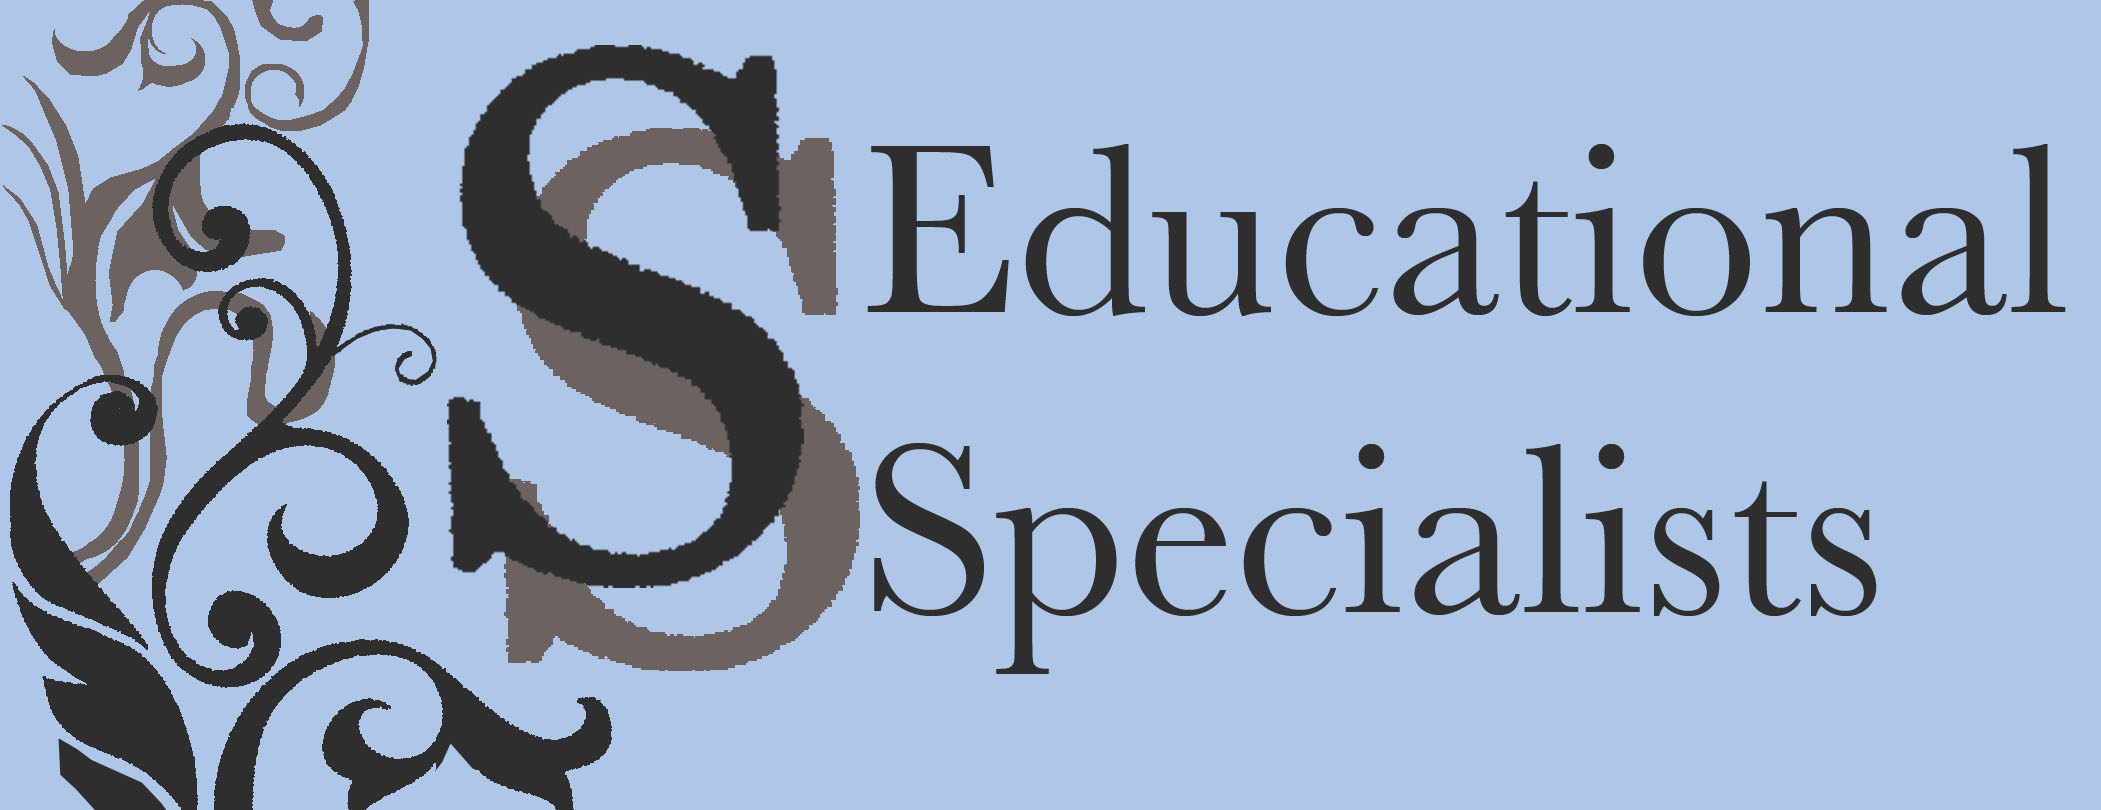 SS Educational Logo.jpg